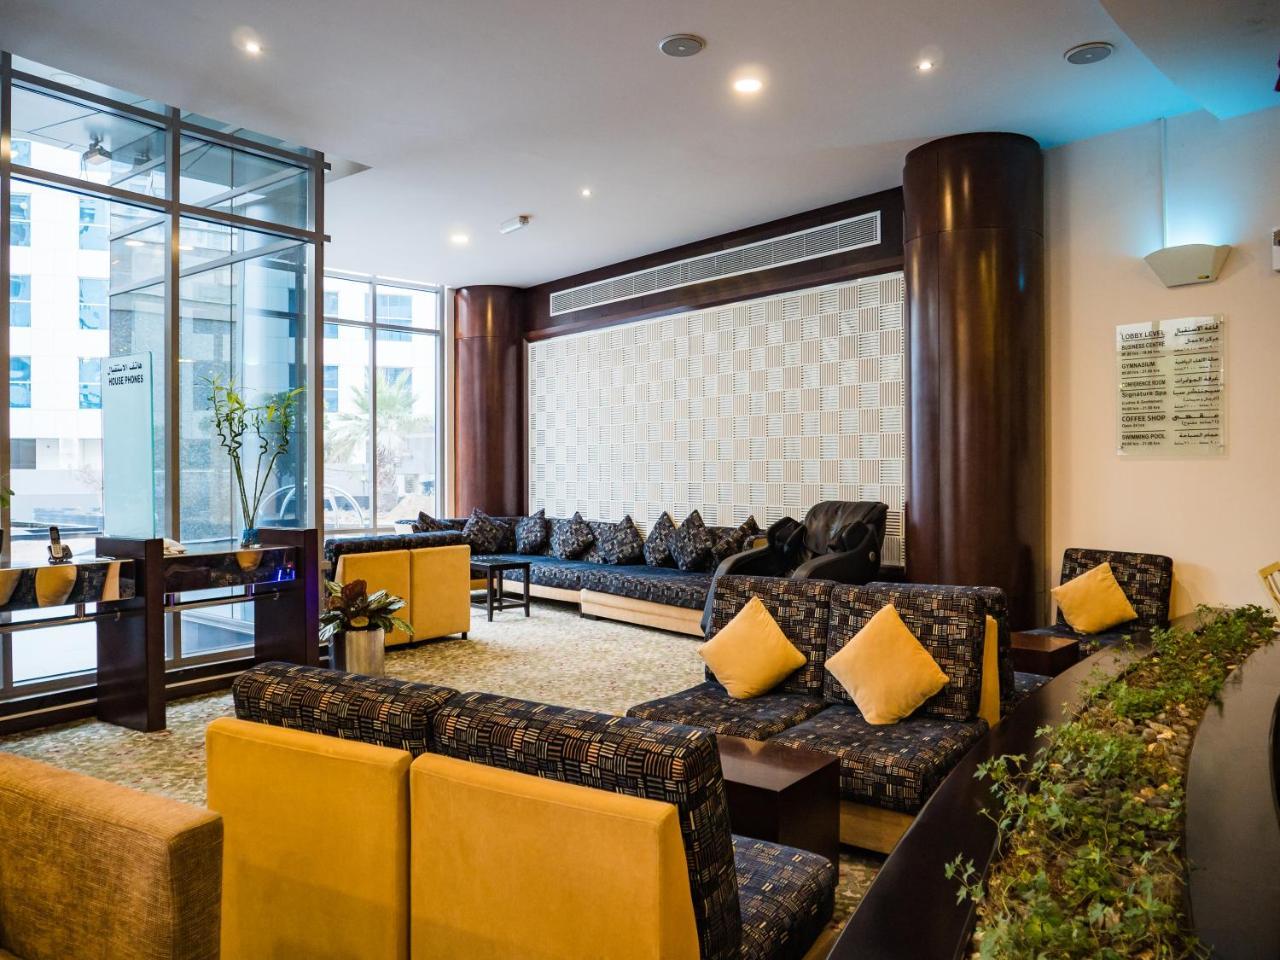 Signature Hotel Apartments And Spa Dubái Exterior foto